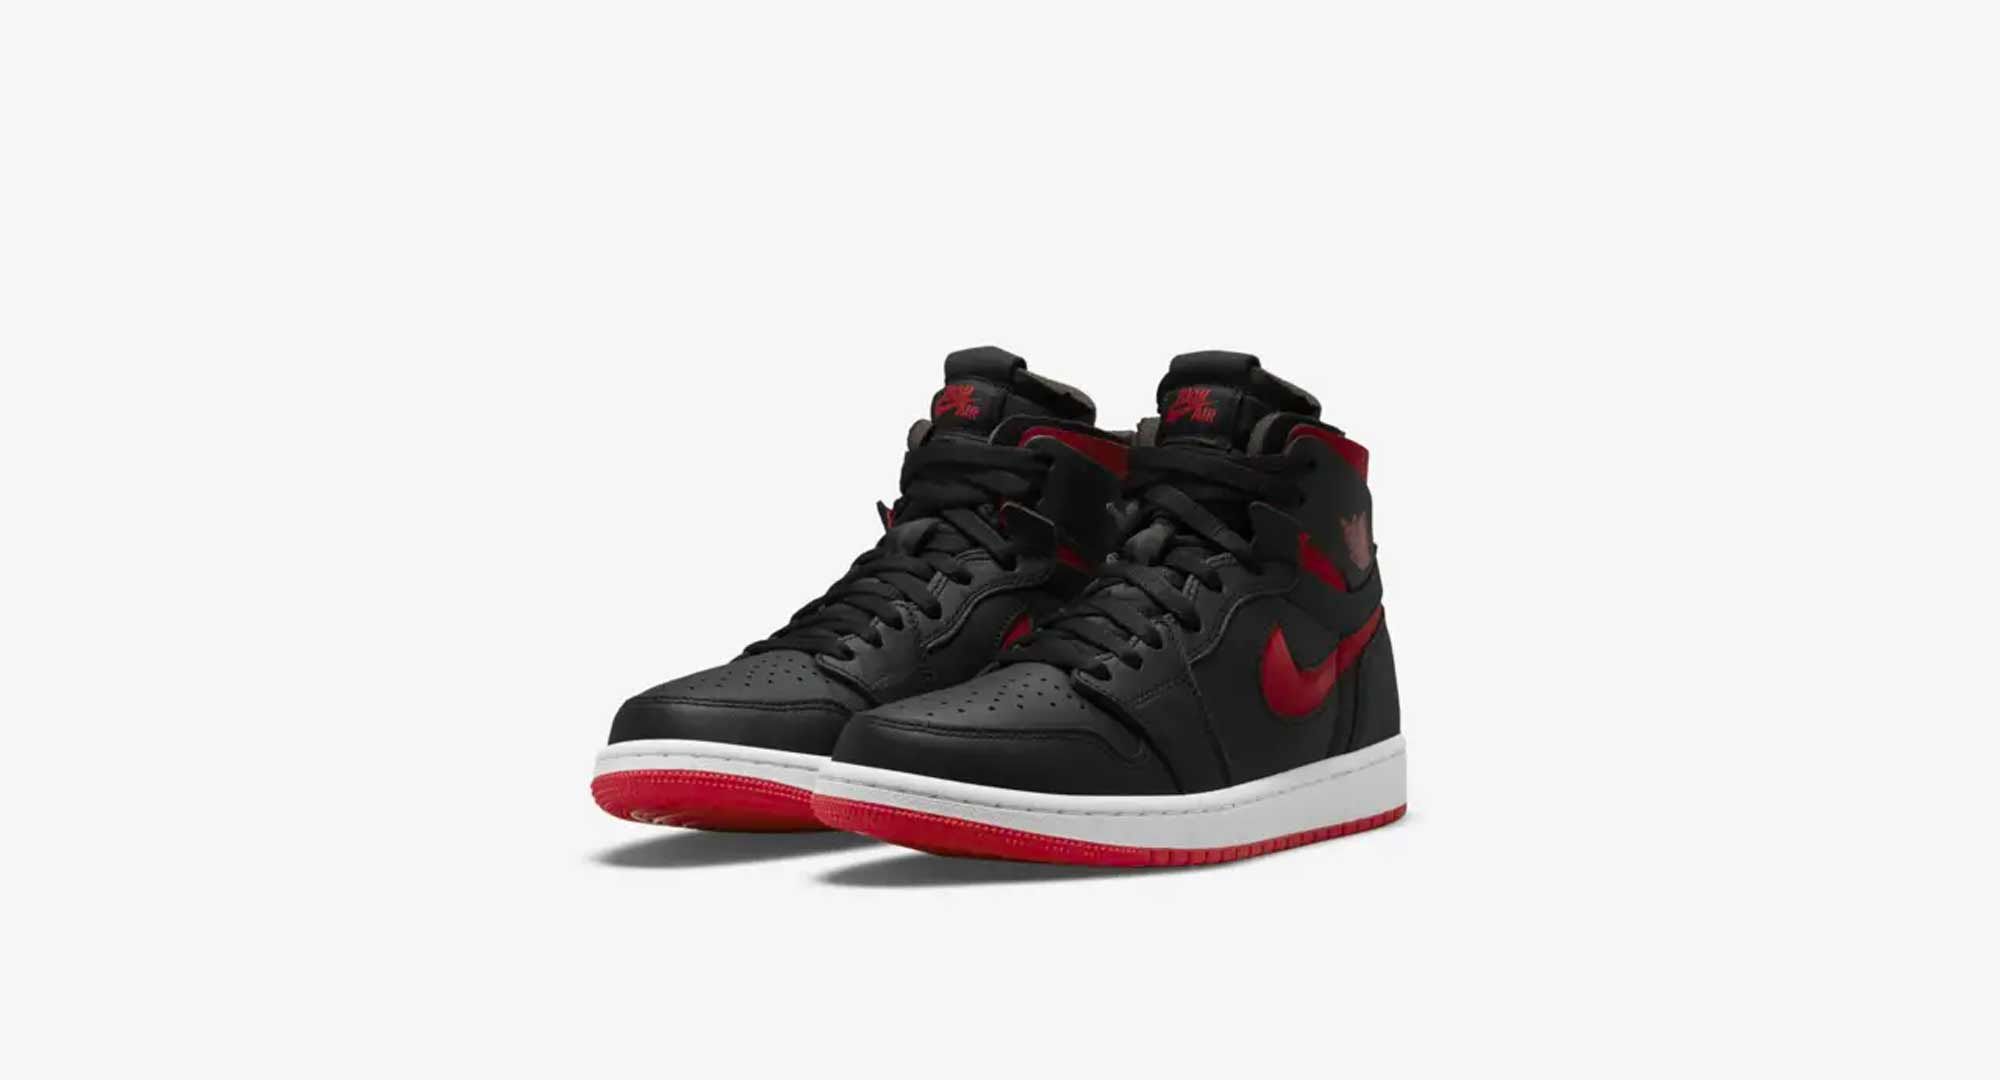 Nike lanza estas zapatillas Jordan en rojo negro